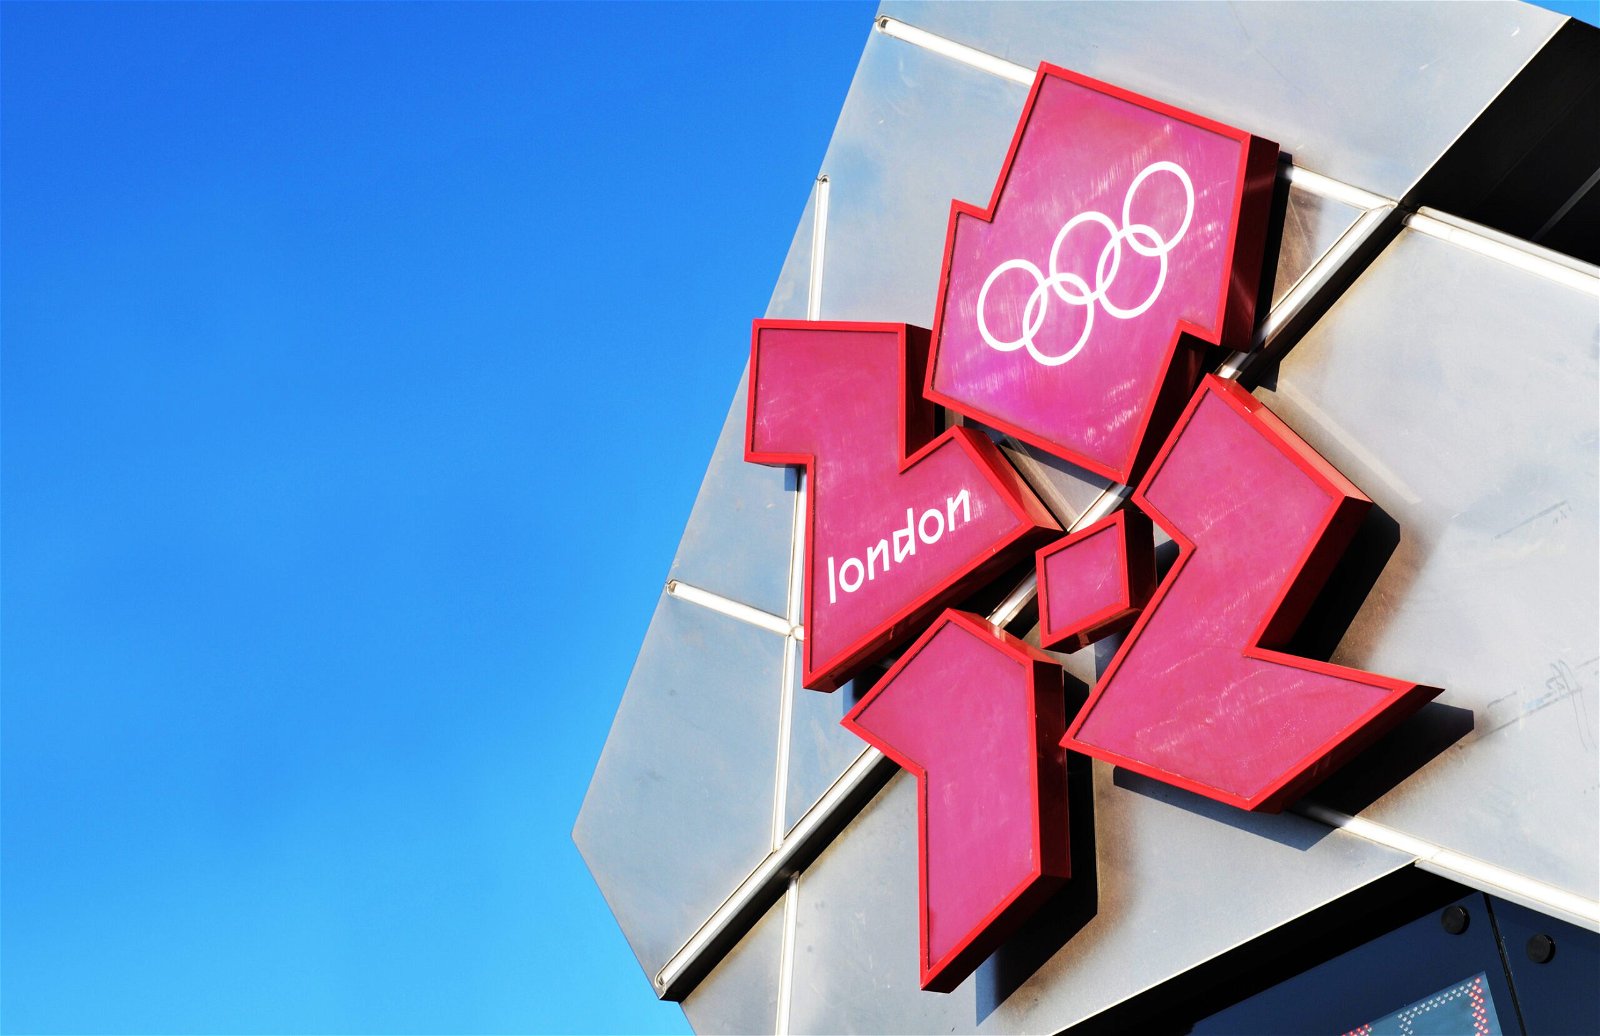 2012 London Olympics TV Broadcast